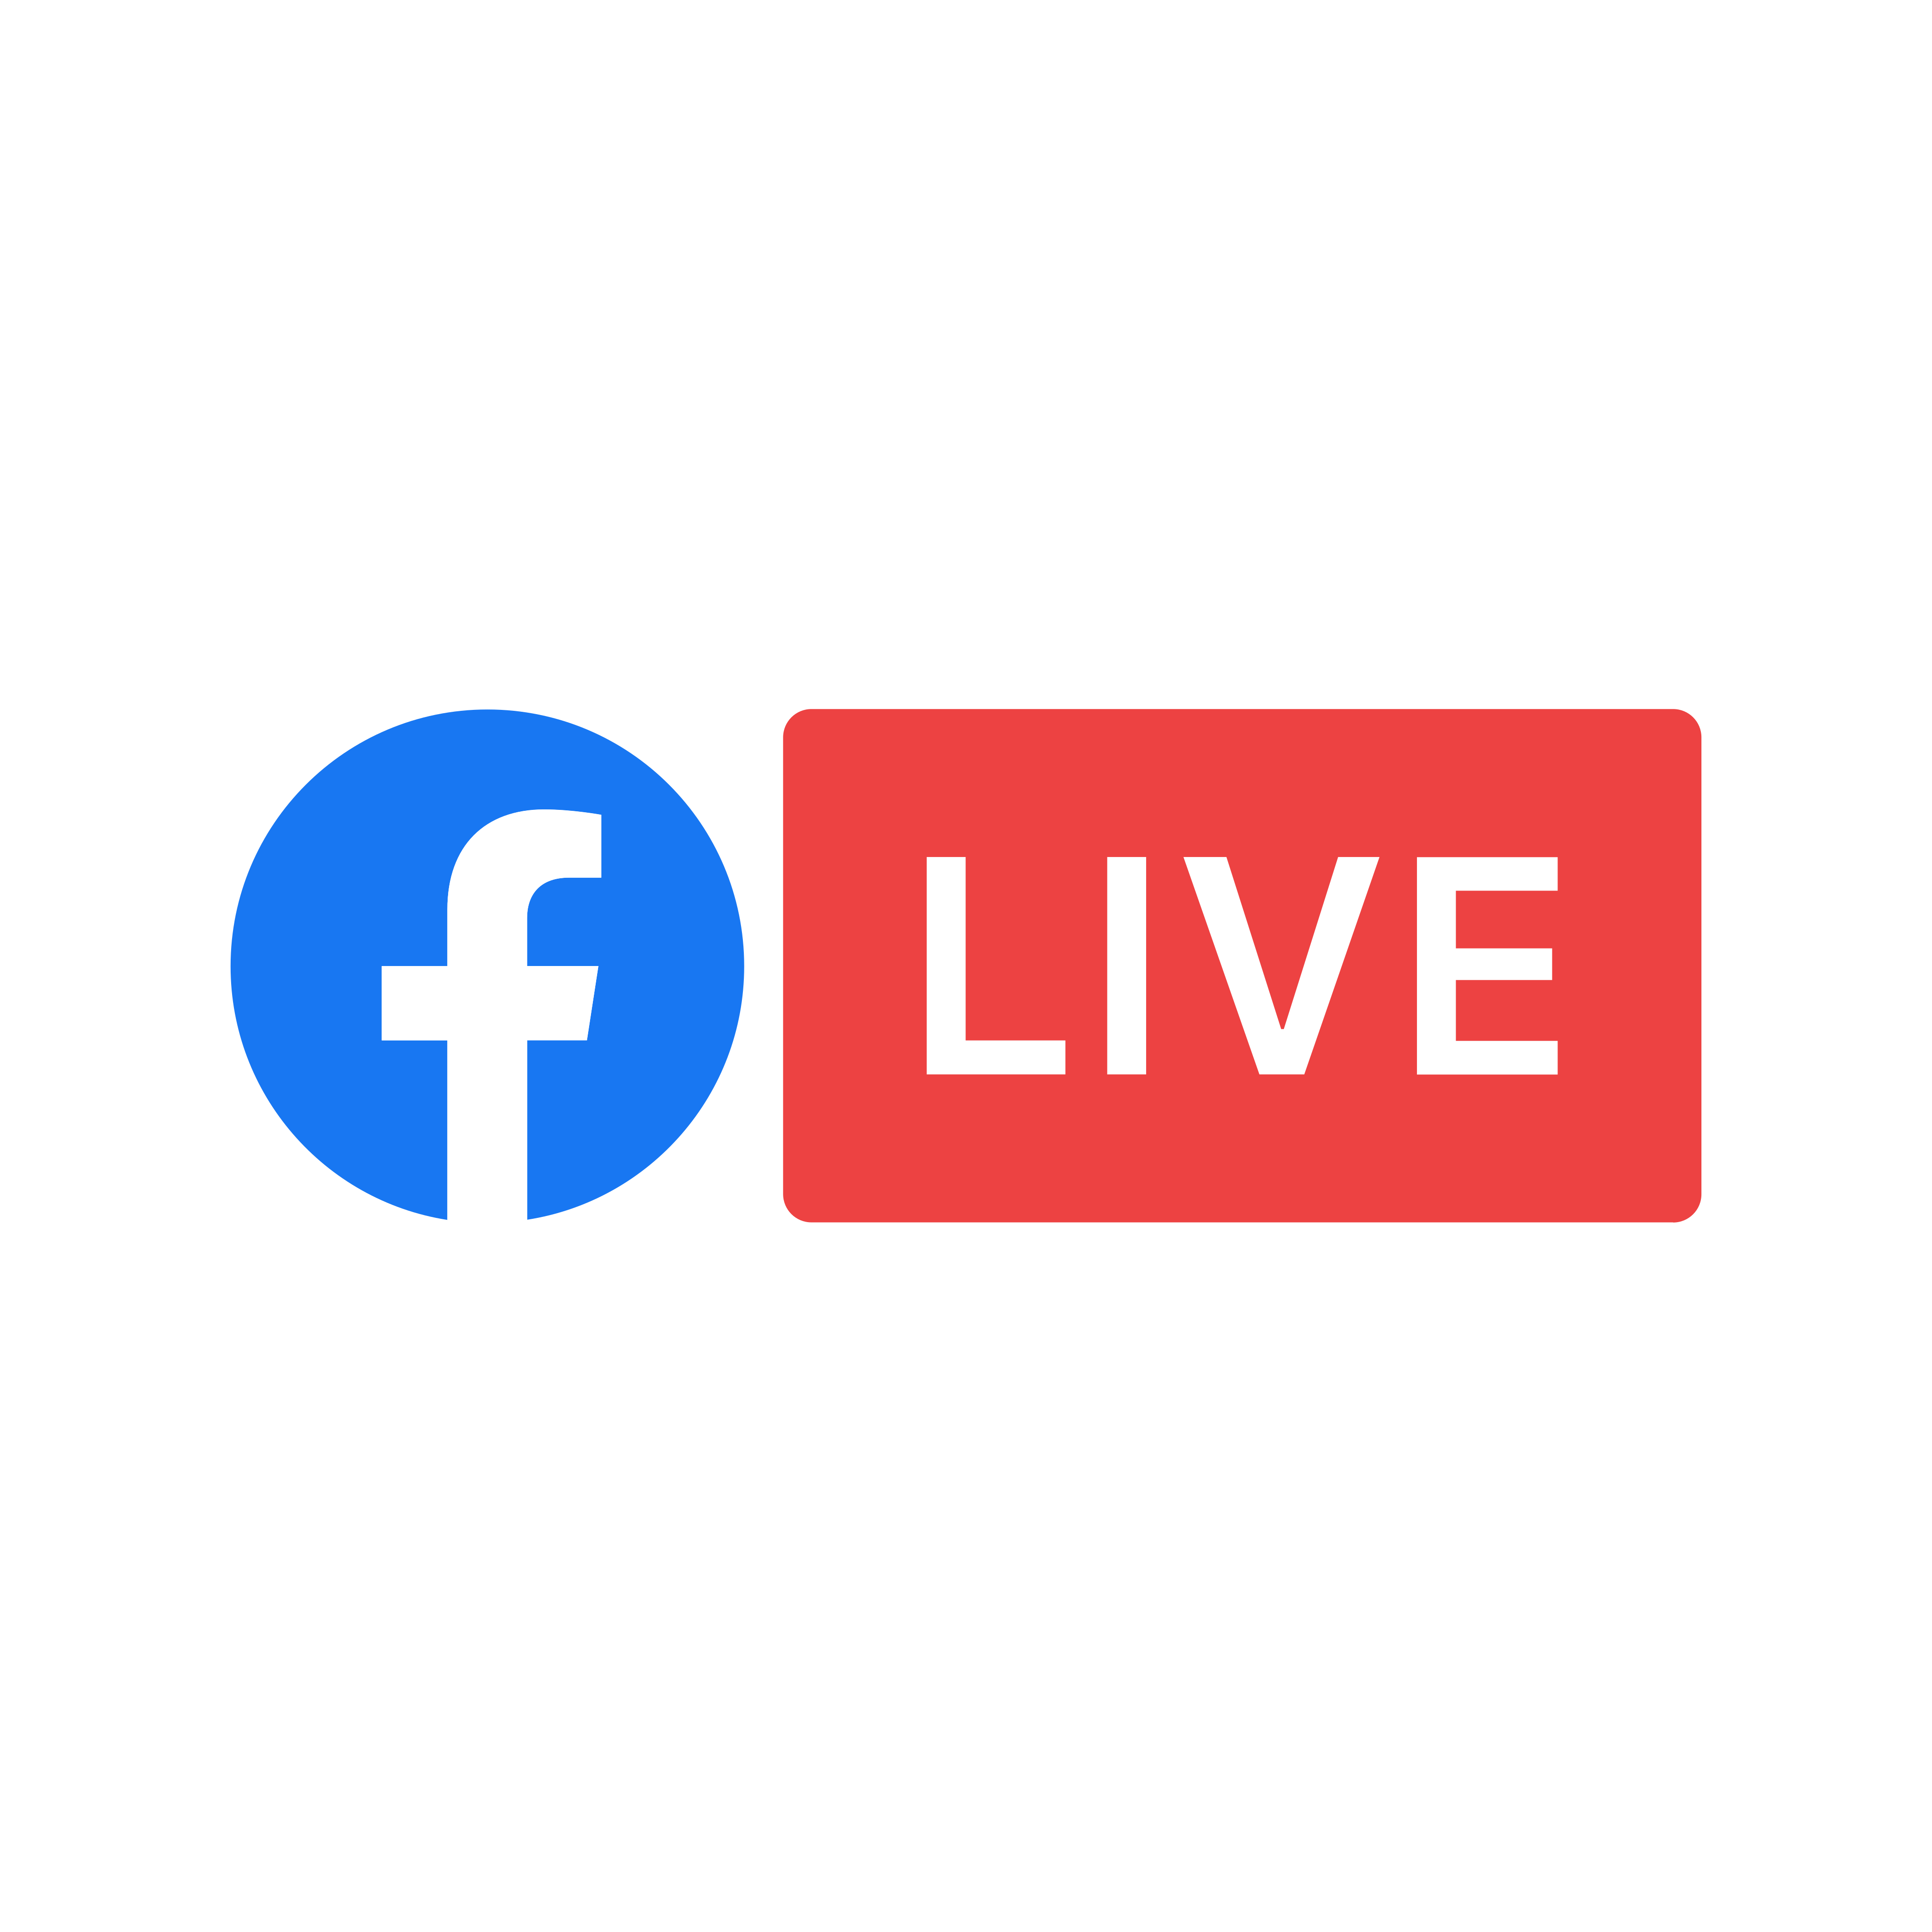 facebook live logo 0